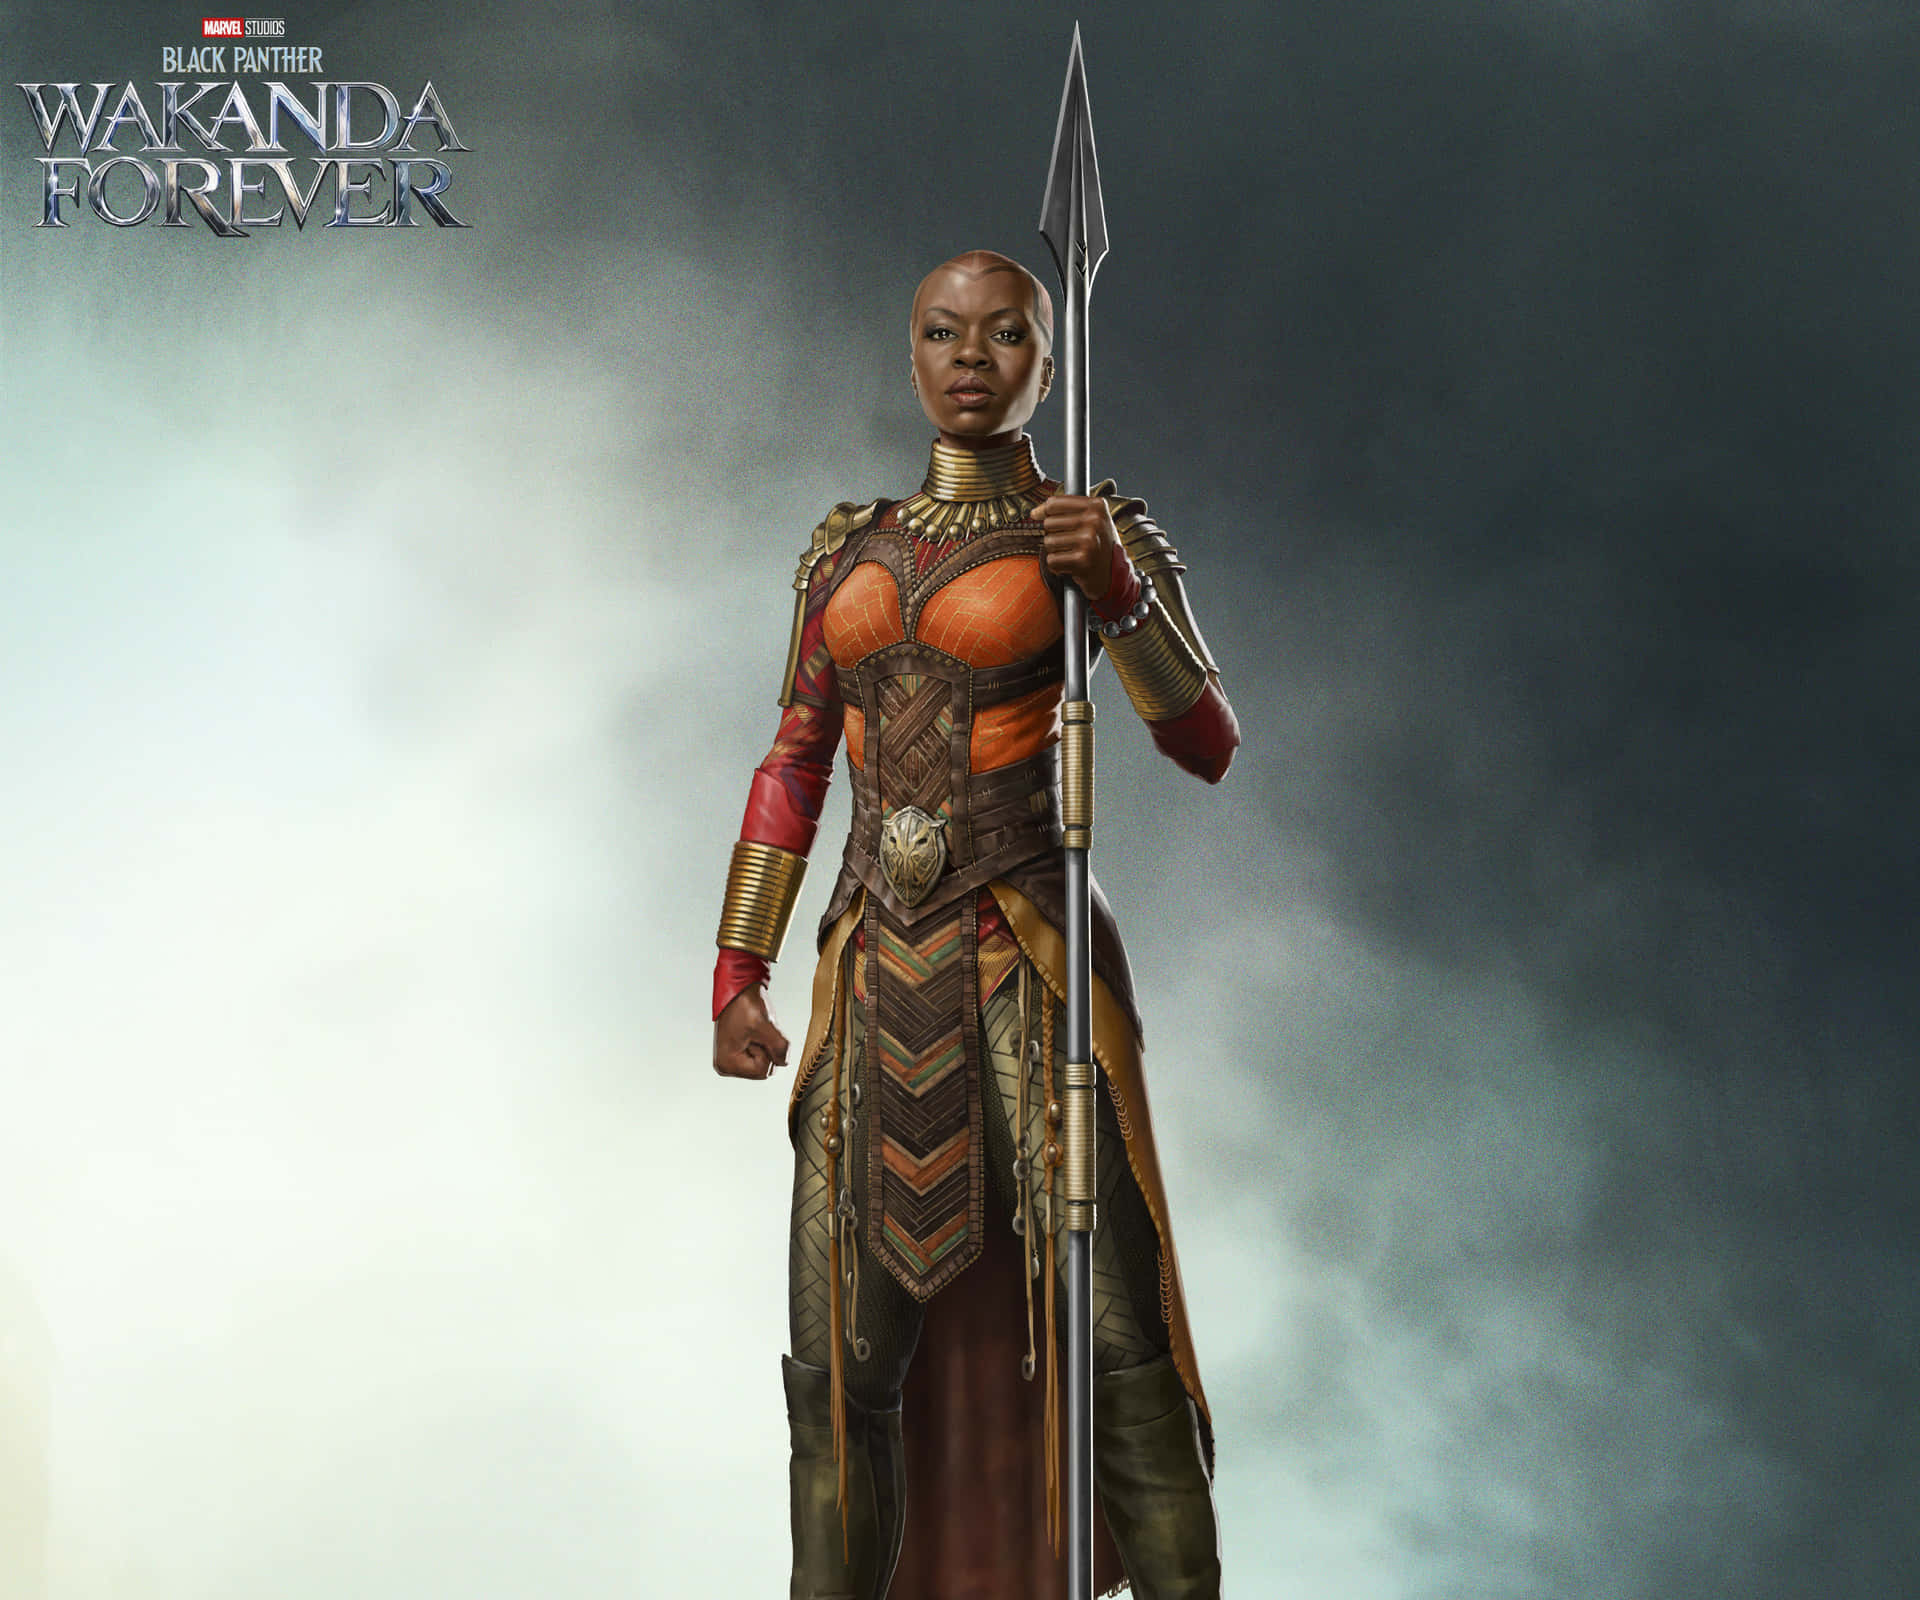 Caption: Okoye, the fierce Dora Milaje warrior from Marvel's Black Panther Wallpaper